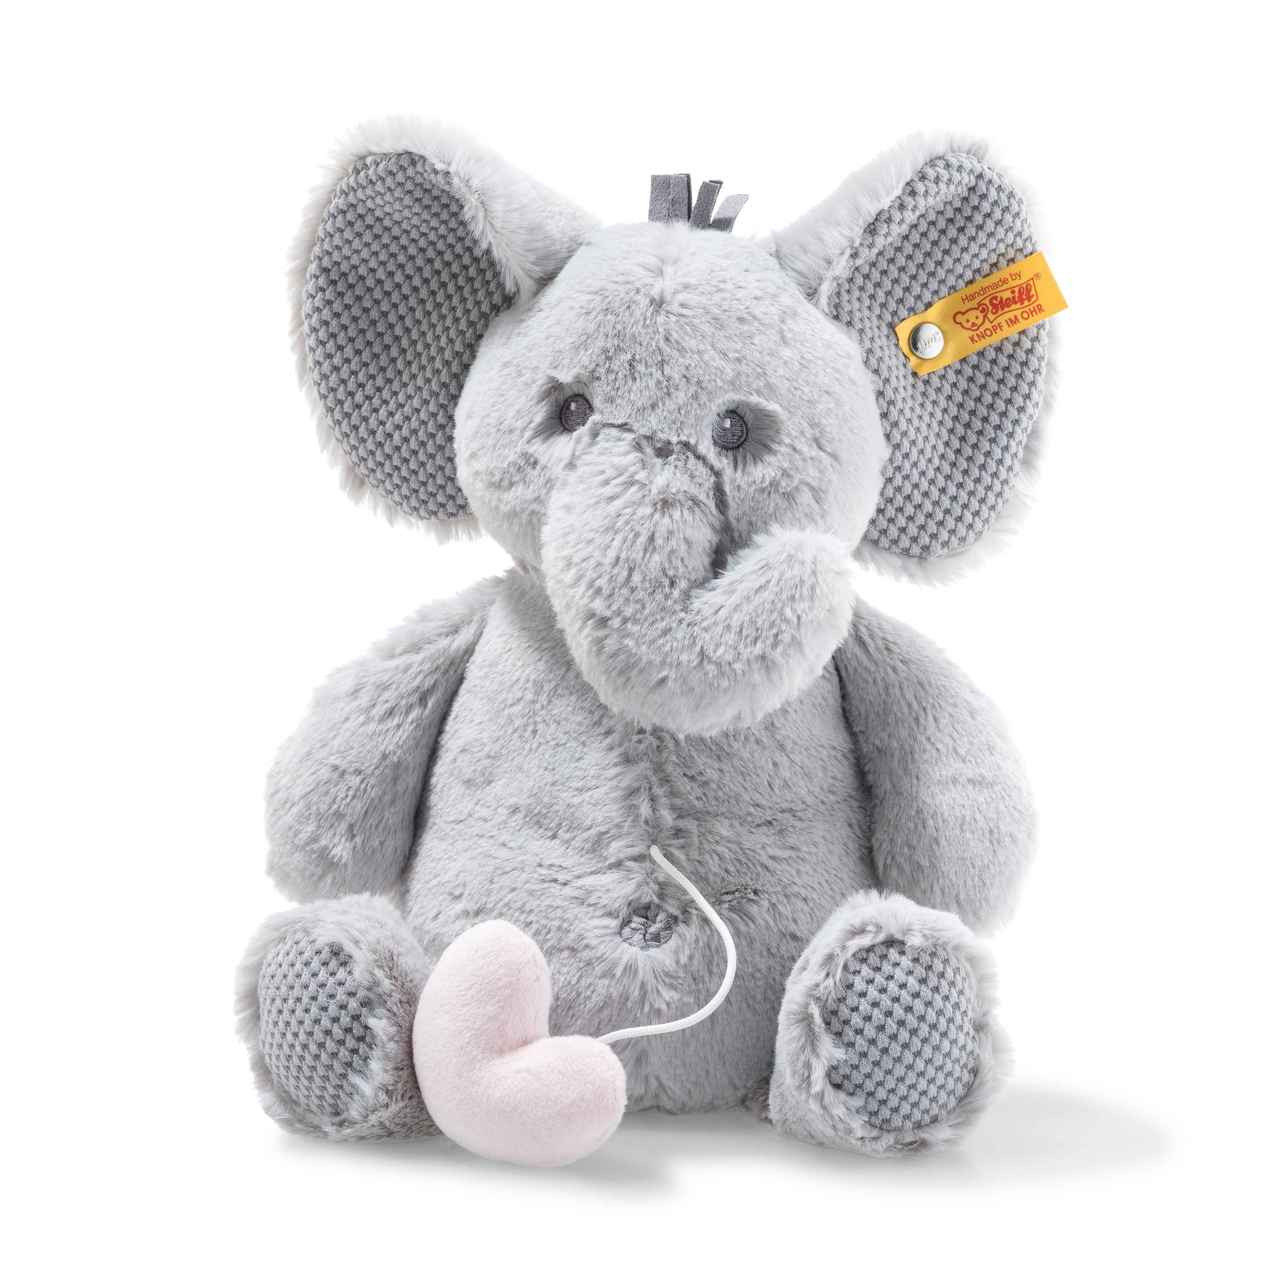 ellie the elephant stuffed animal